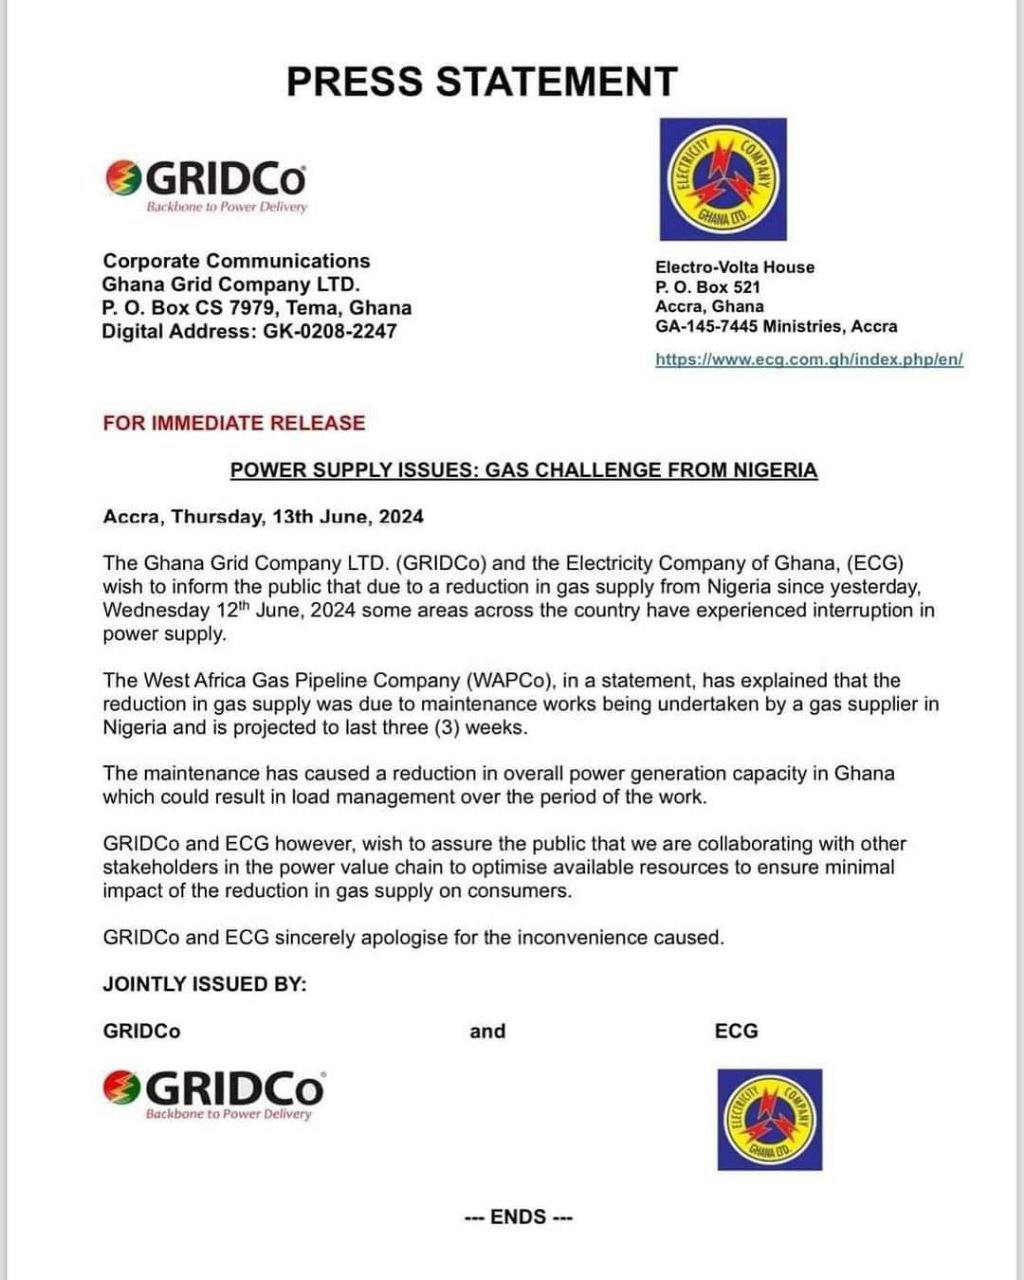 Dumsor Alert by GRIDCO and ECG